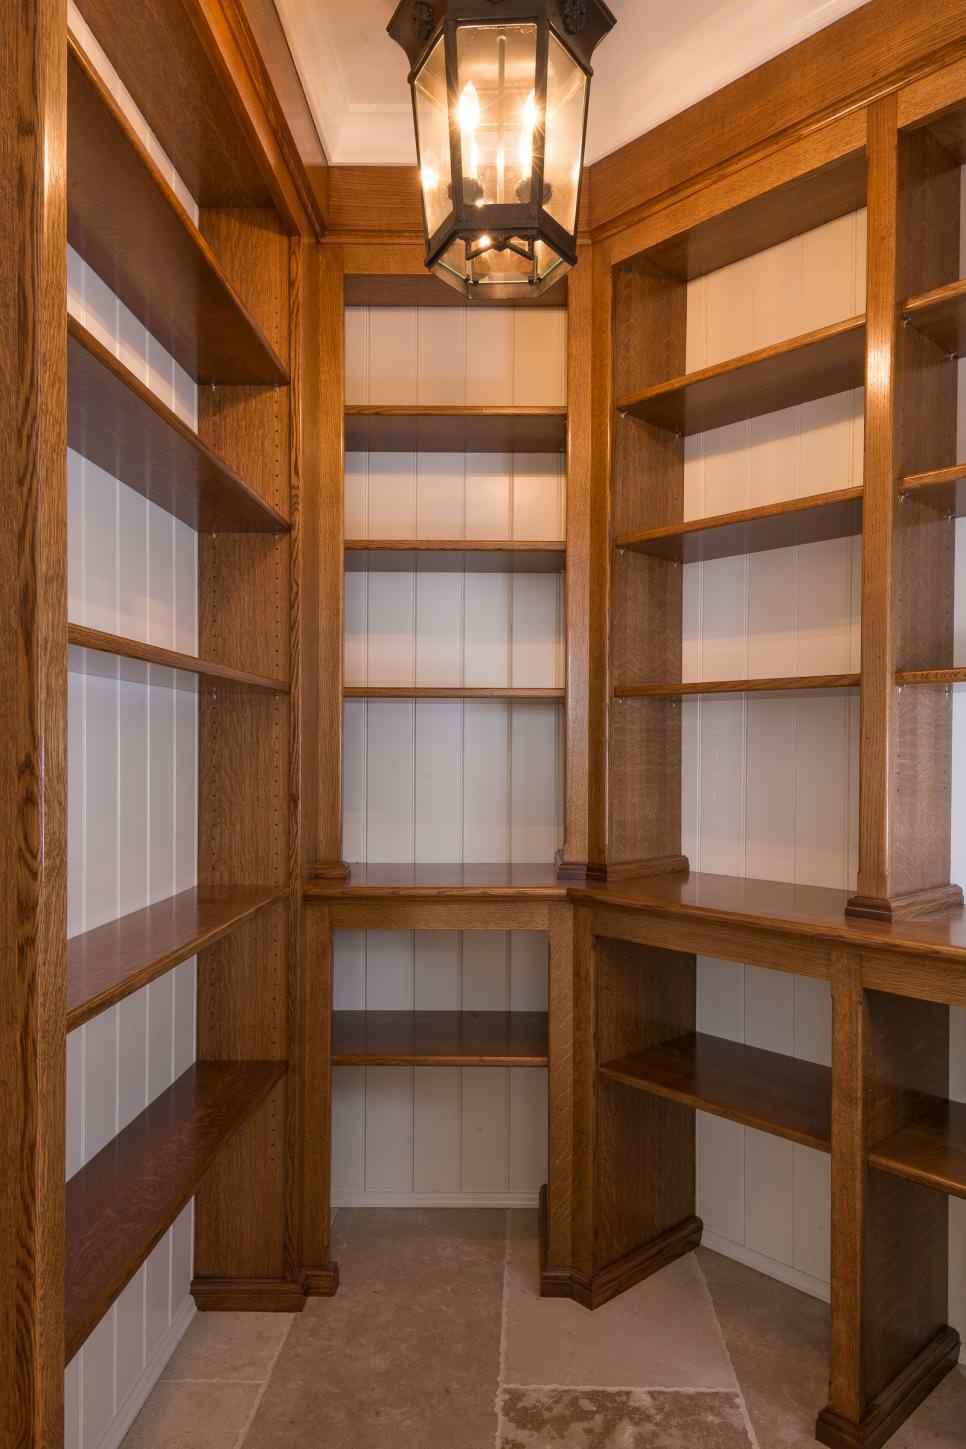 25+ Wood Wall Shelves Designs, Ideas, Plans | Design Trends - Premium